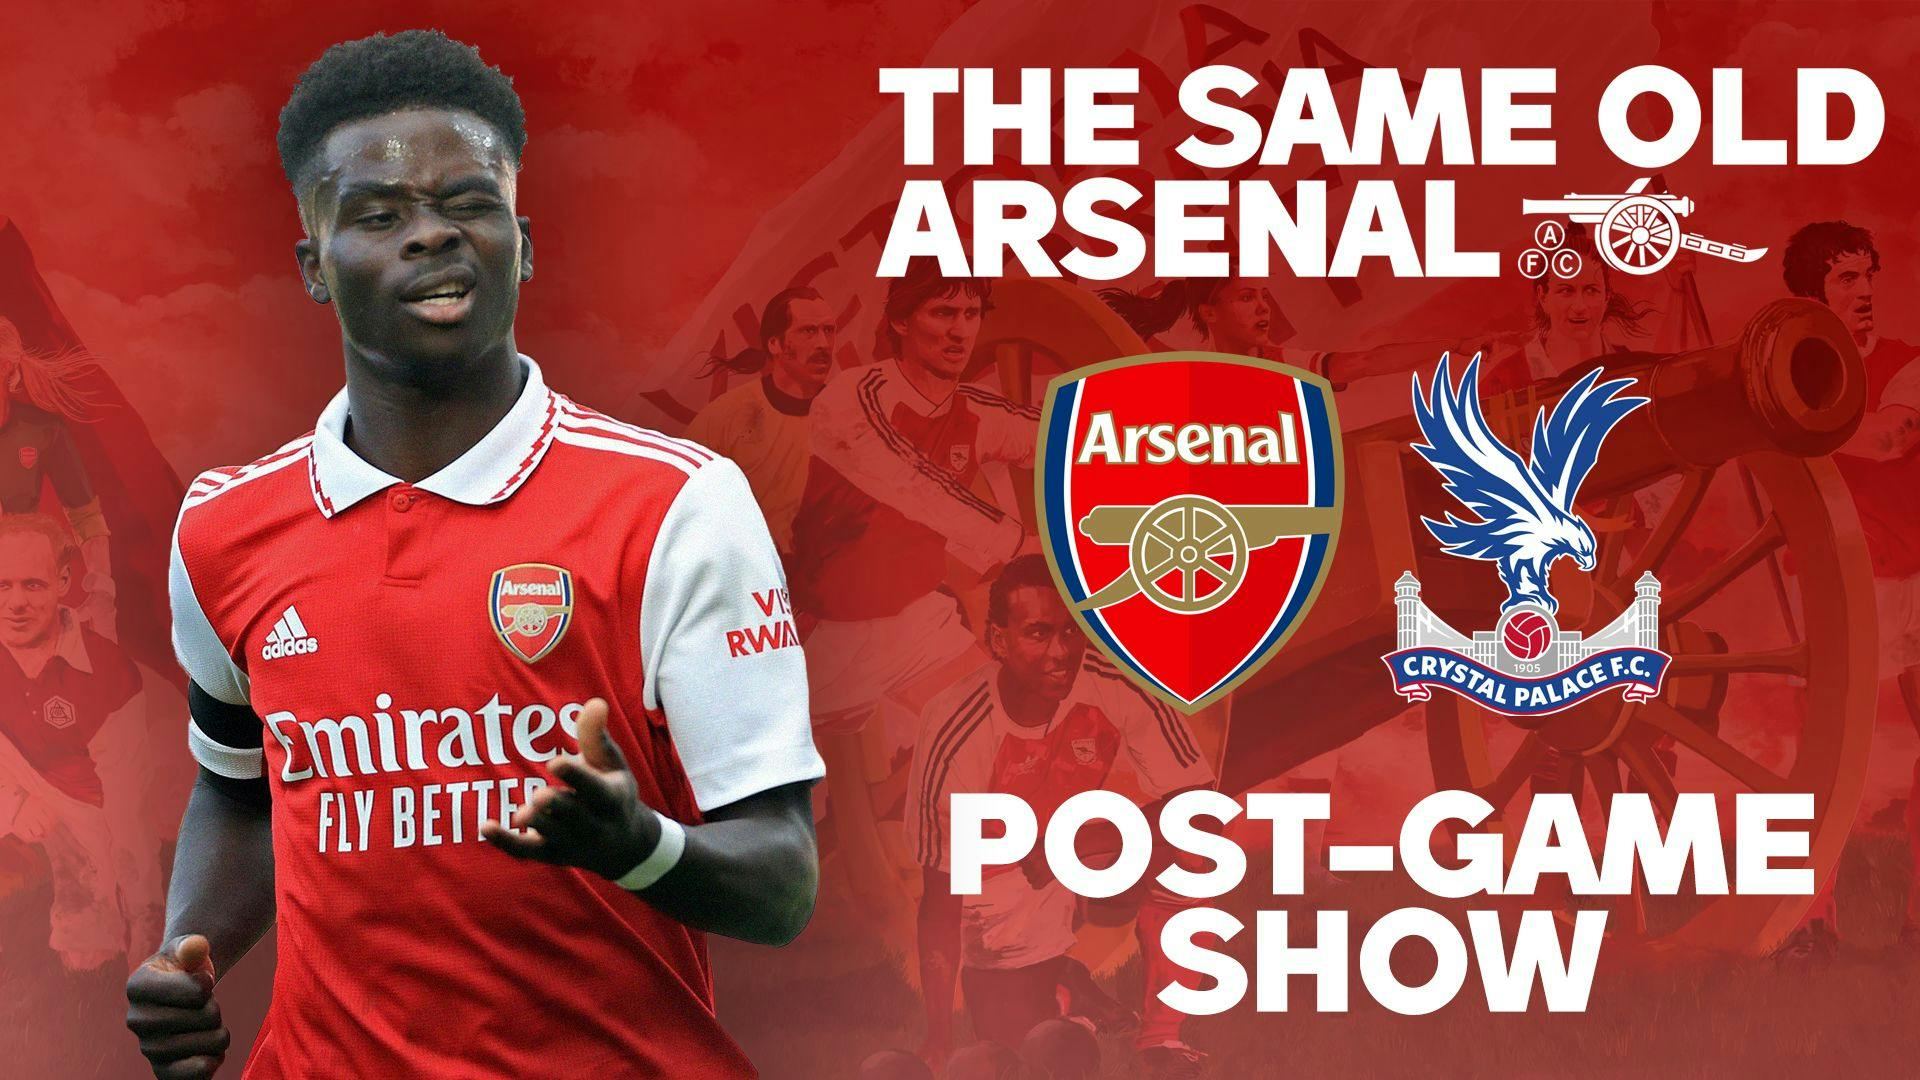 Arsenal v Crystal Palace Post Game Show